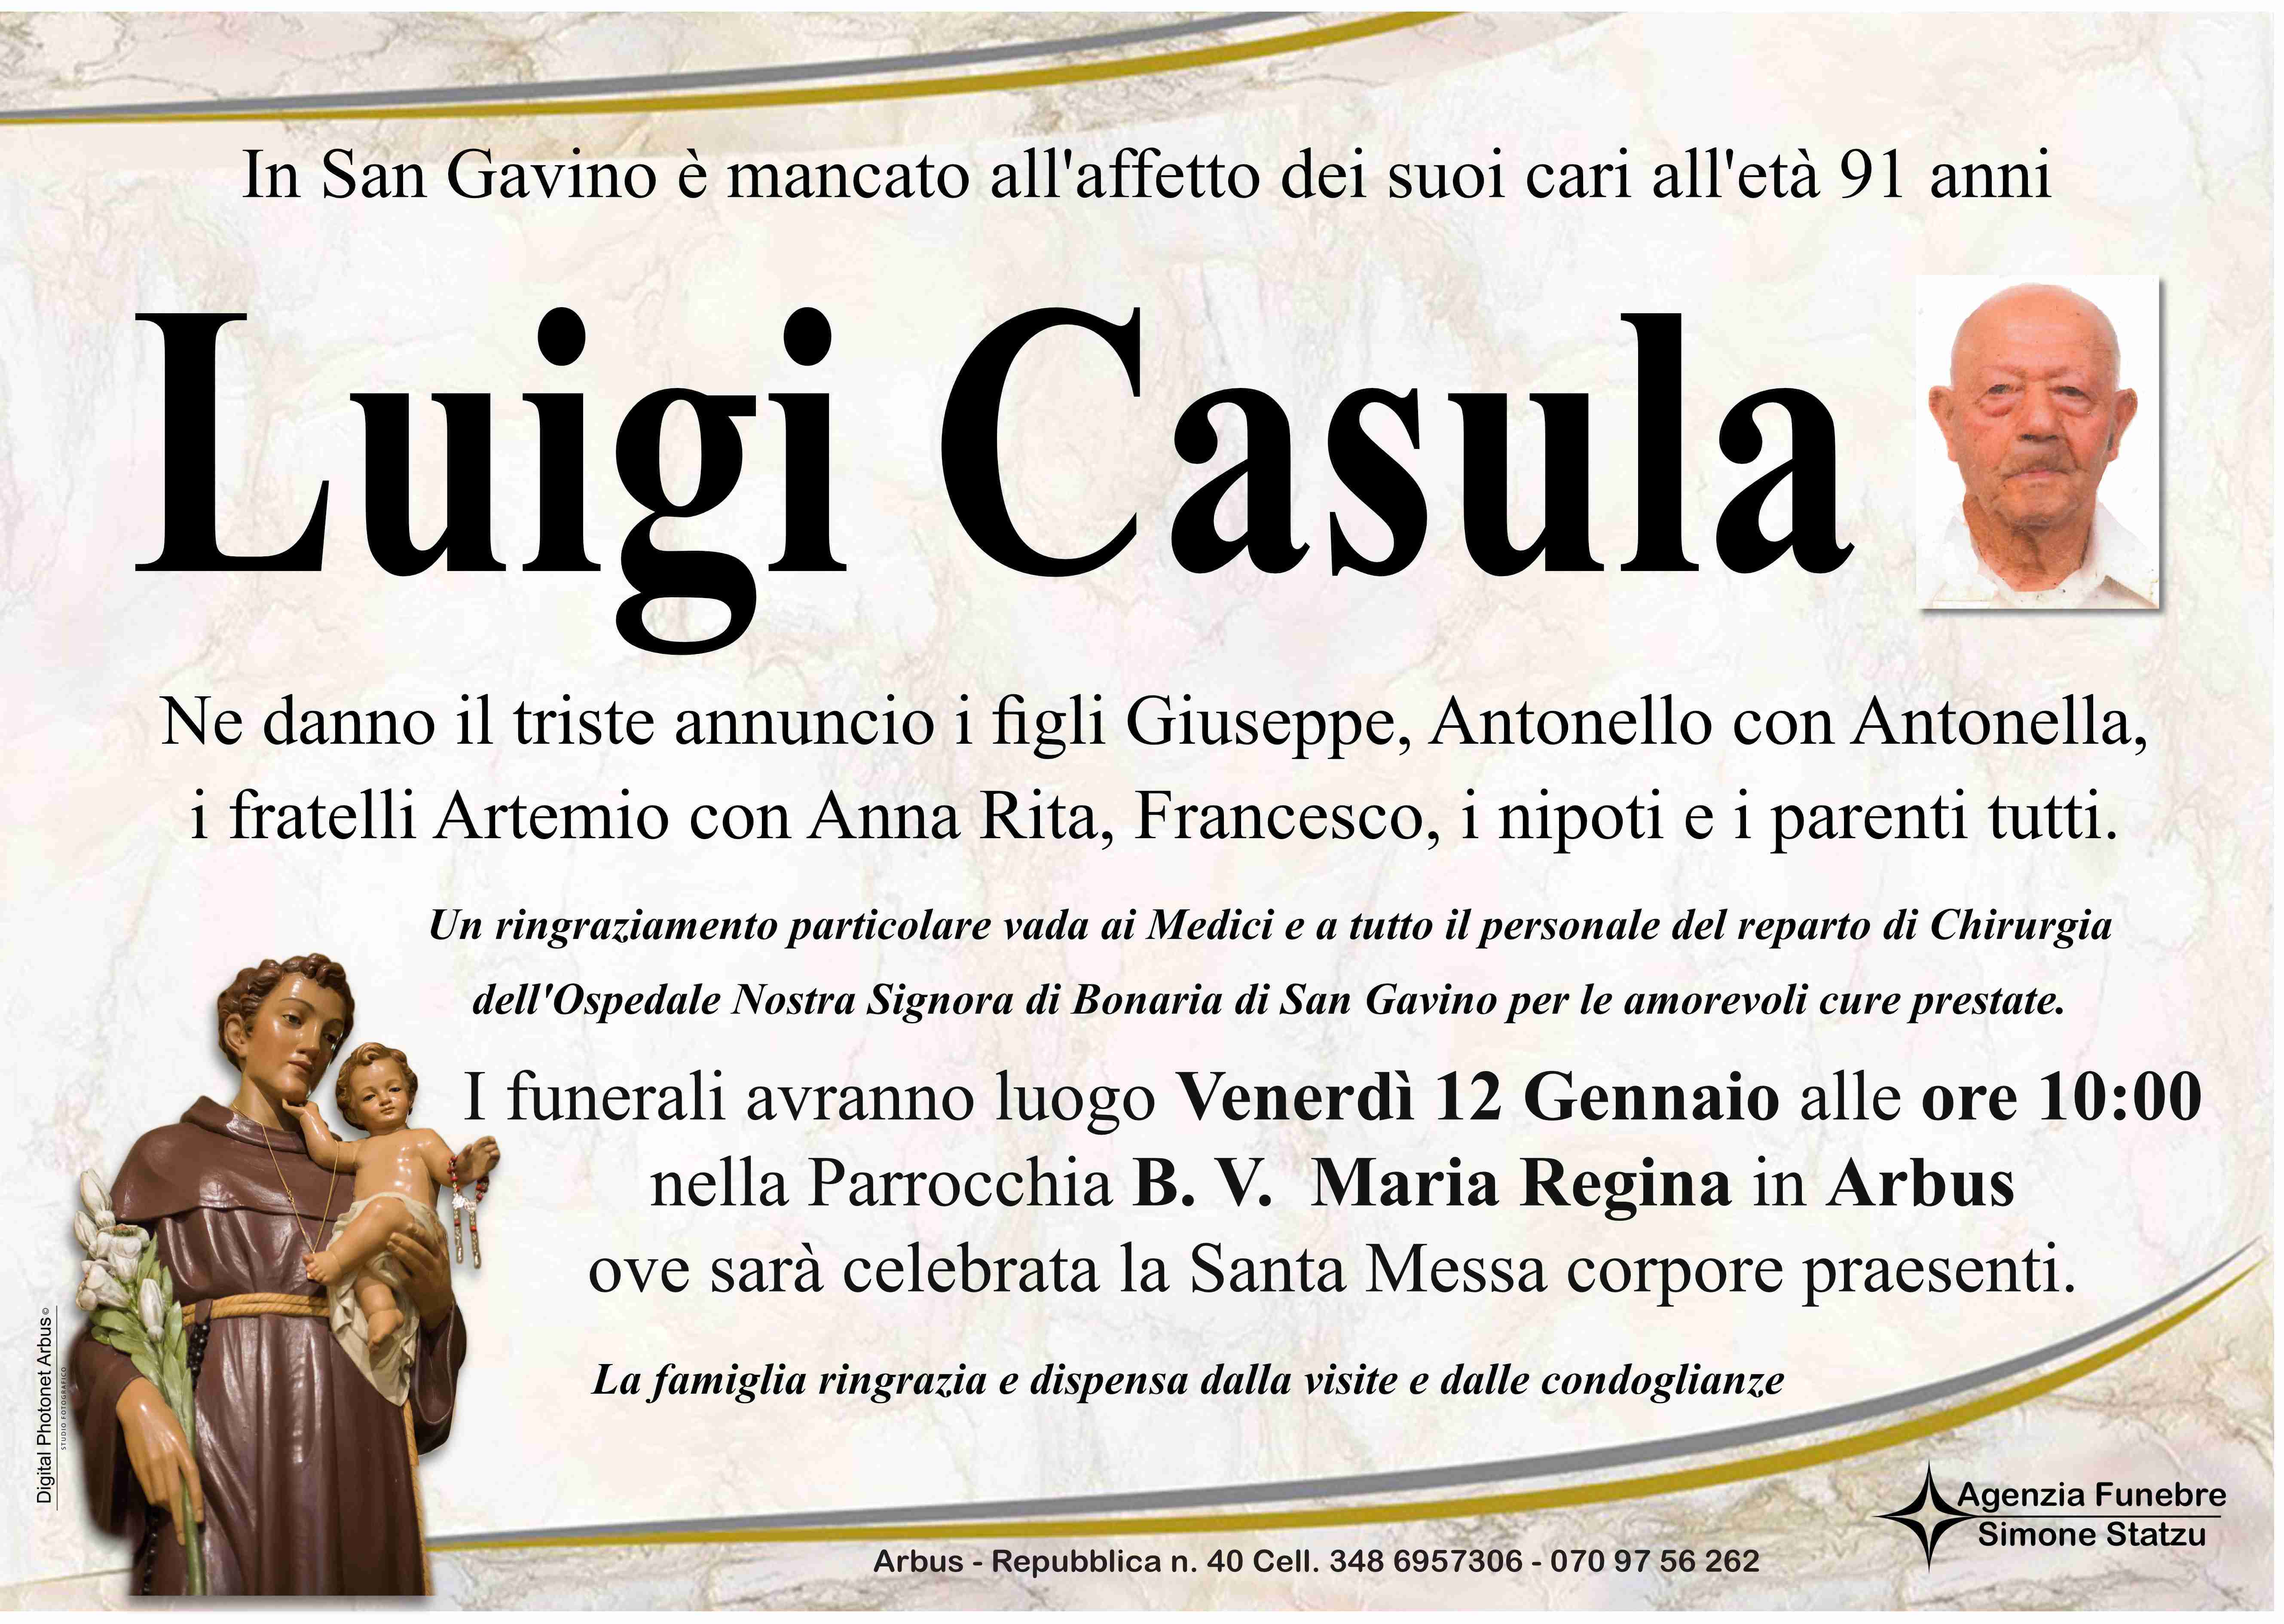 Luigi Casula